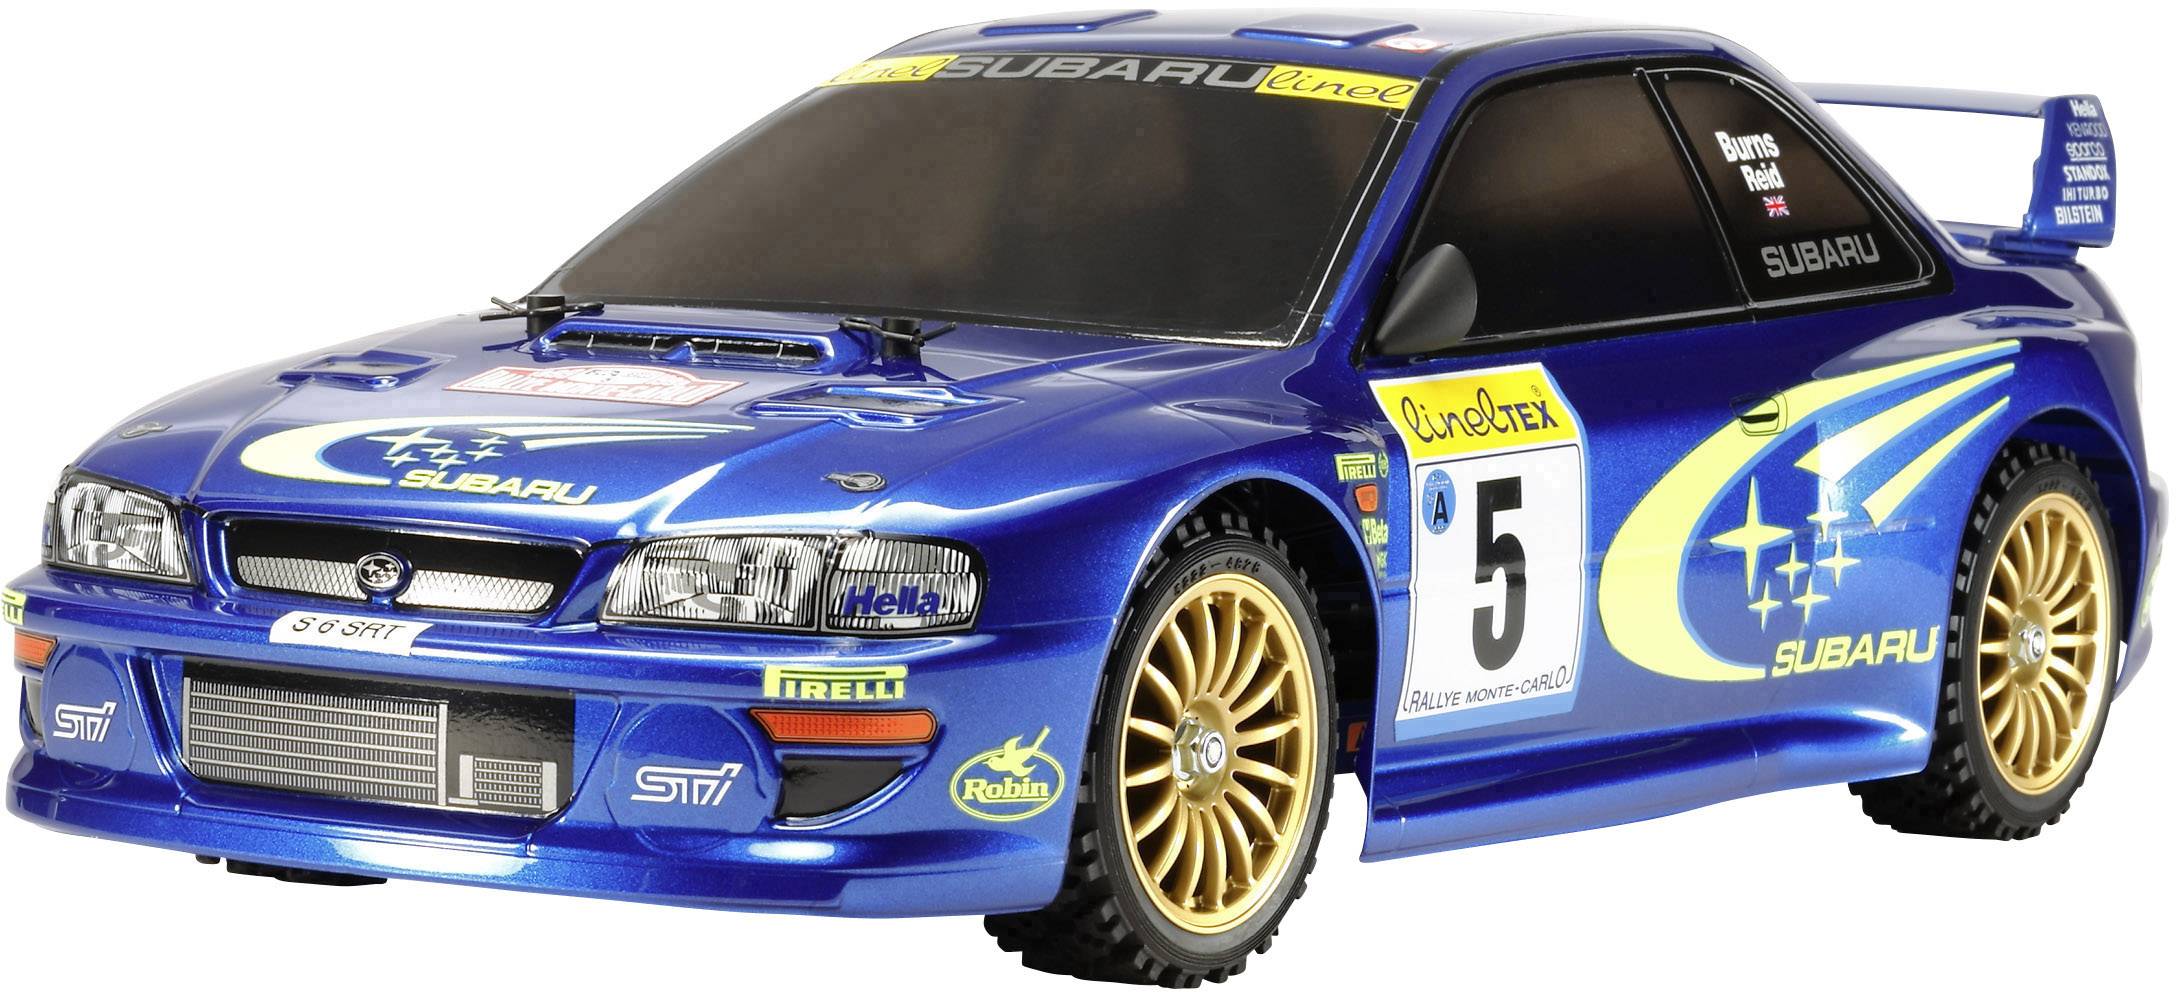 Model samochodu RC Tamiya Subaru Impreza Monte Carlo 1999